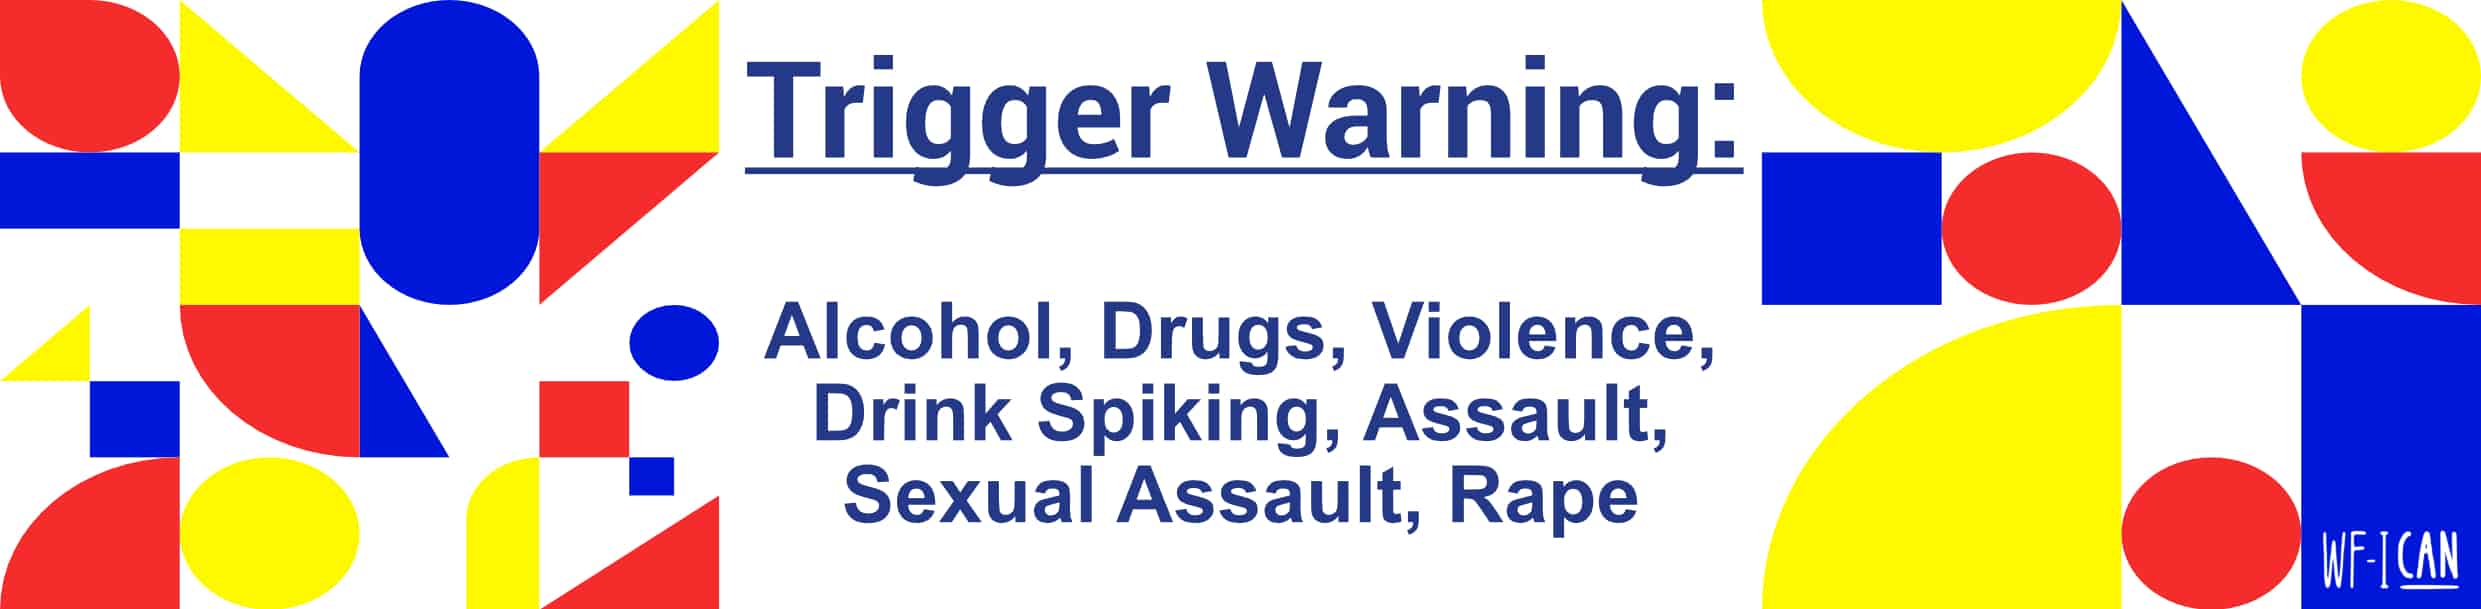 wfican trigger warning drink spiking